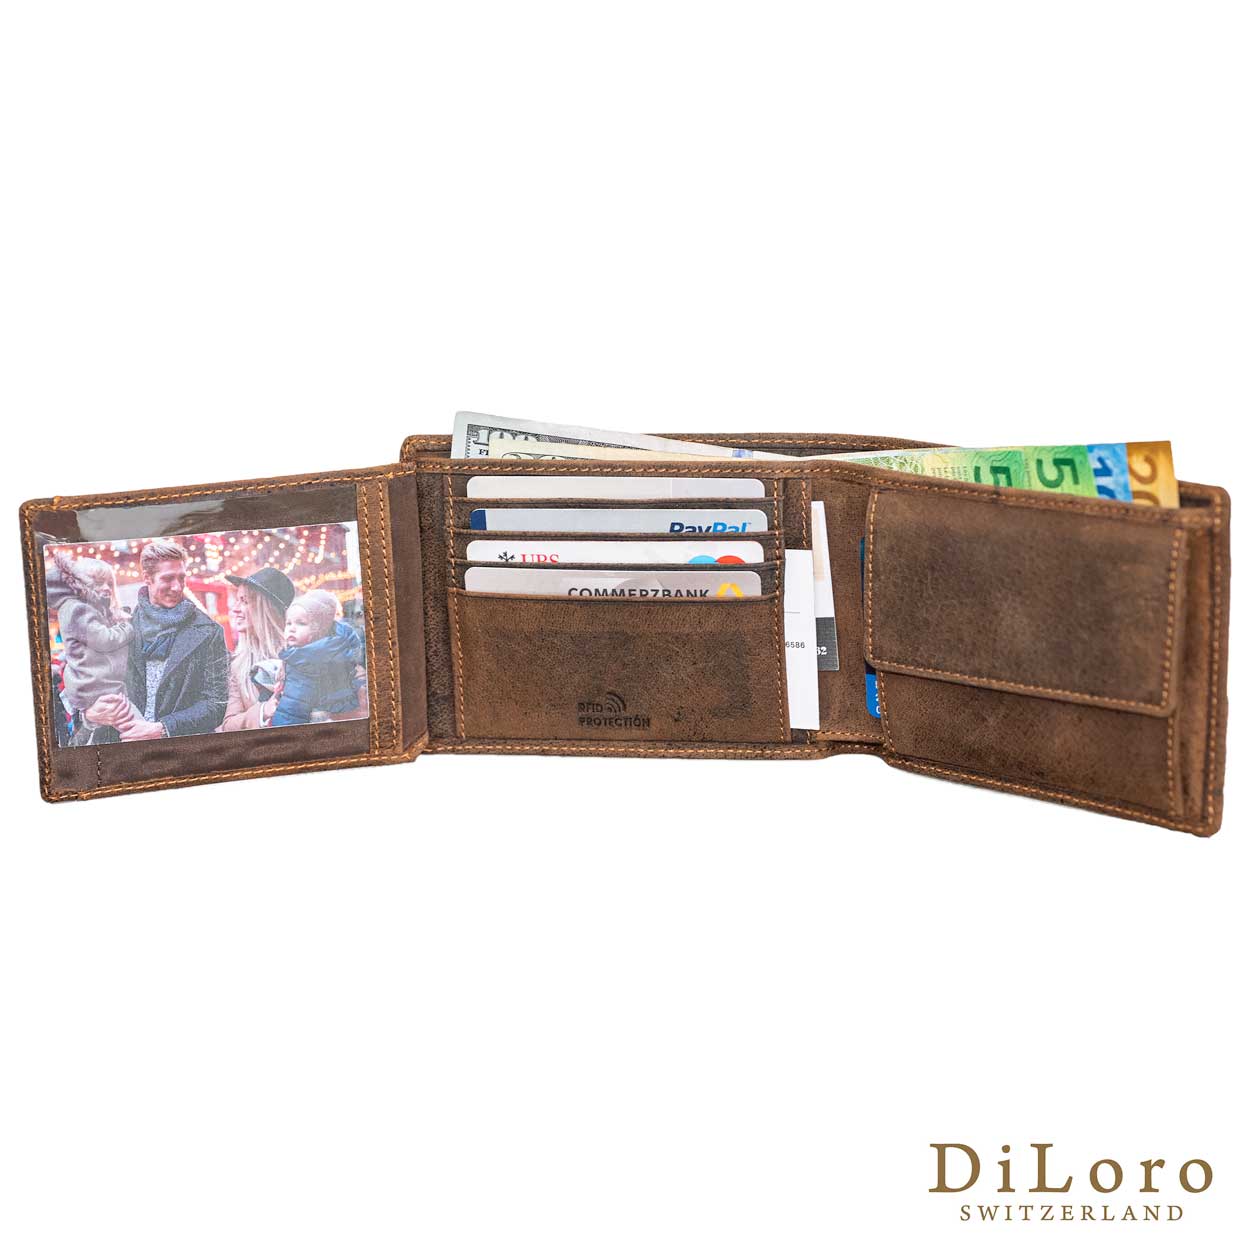 DiLoro Italy Men's Leather Wallet RFID Blocking Genuine Full Grain, Vegetable Tanned Leather, Bifold Flip Coin Wallet, Dark Hunter Brown - Full Open View